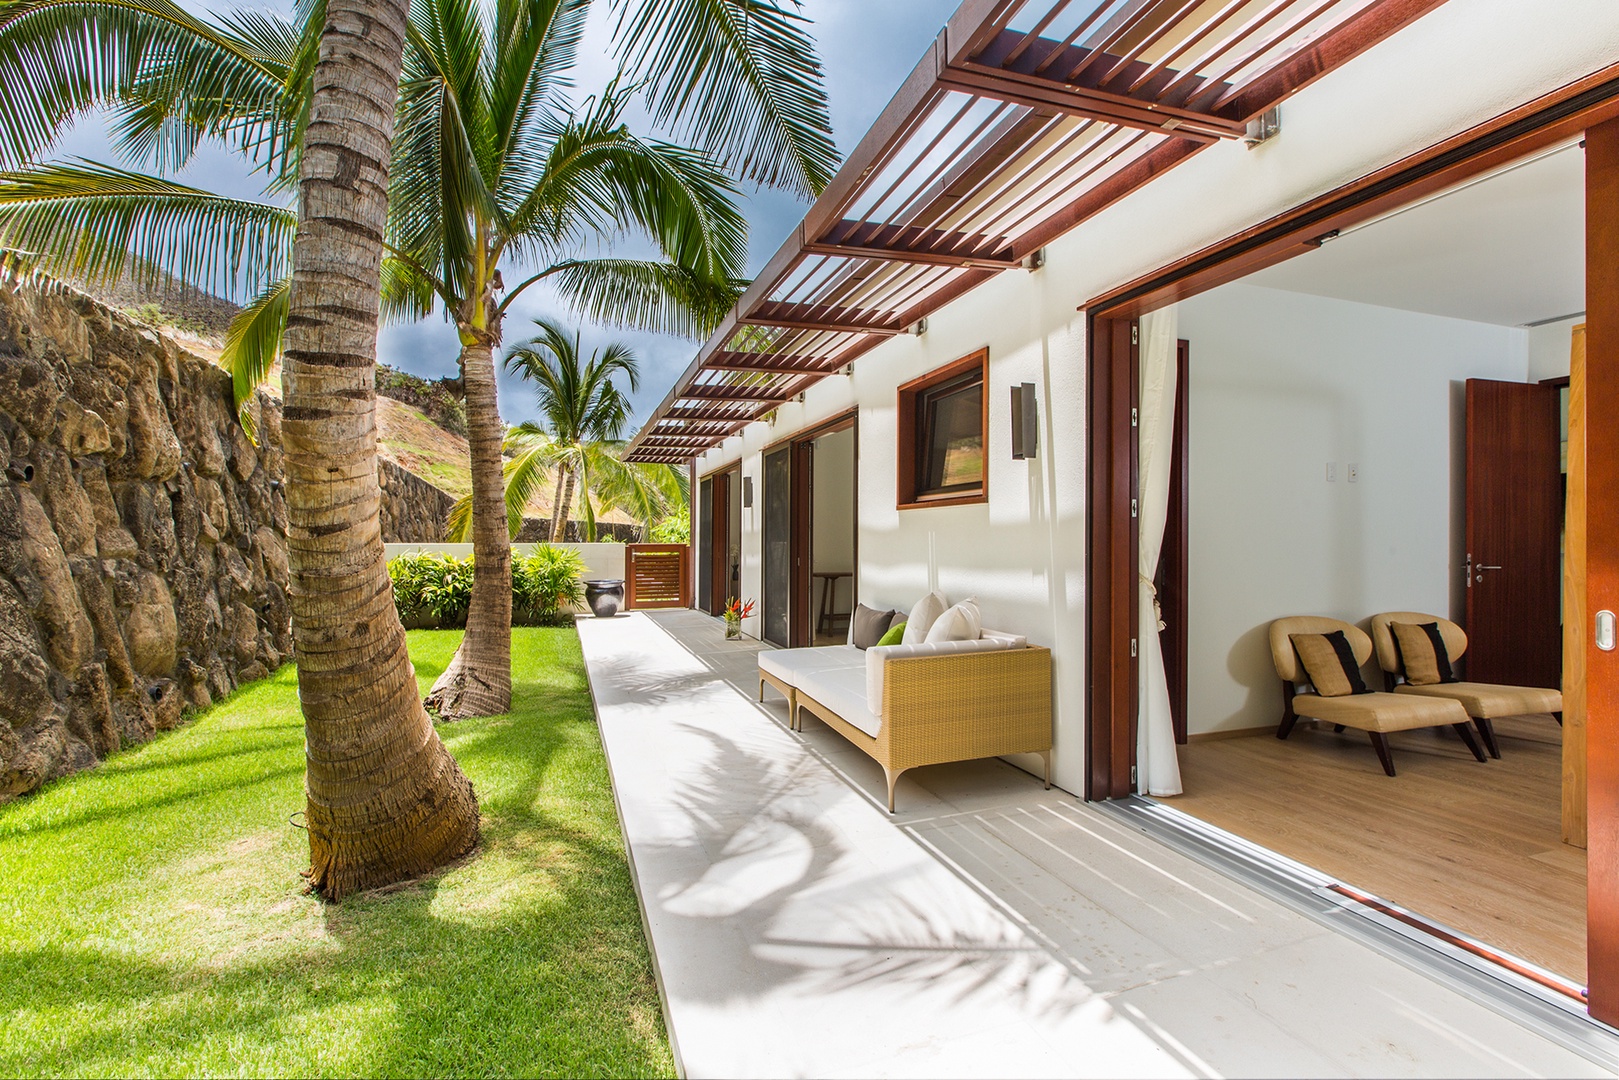 Kailua Vacation Rentals, Lanikai Hillside Estate - Guest Bedrooms shared lanai with mountain views